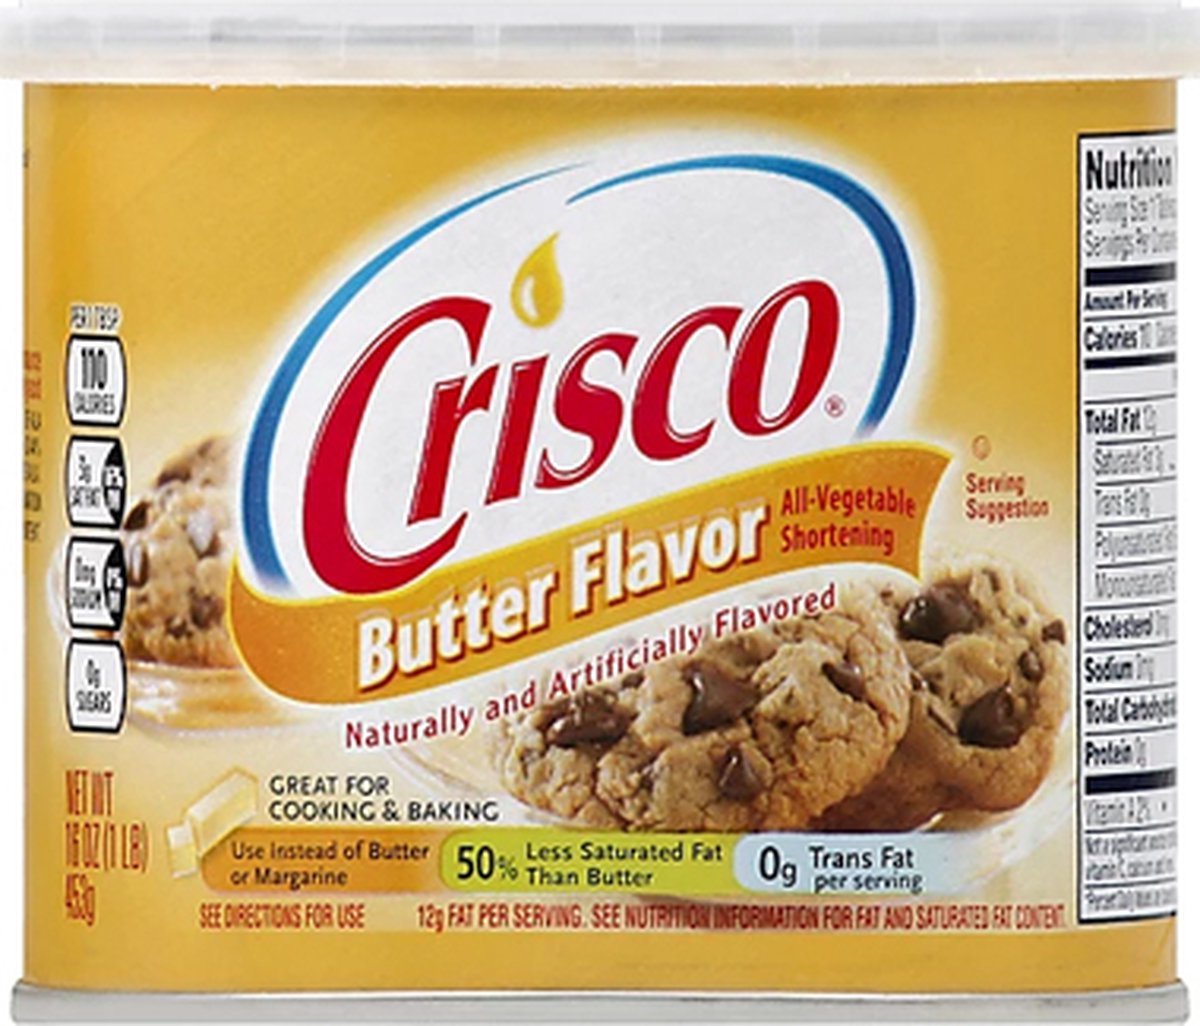 Crisco - Butter Flavor All-Vegetable Shortening - 12x 453g